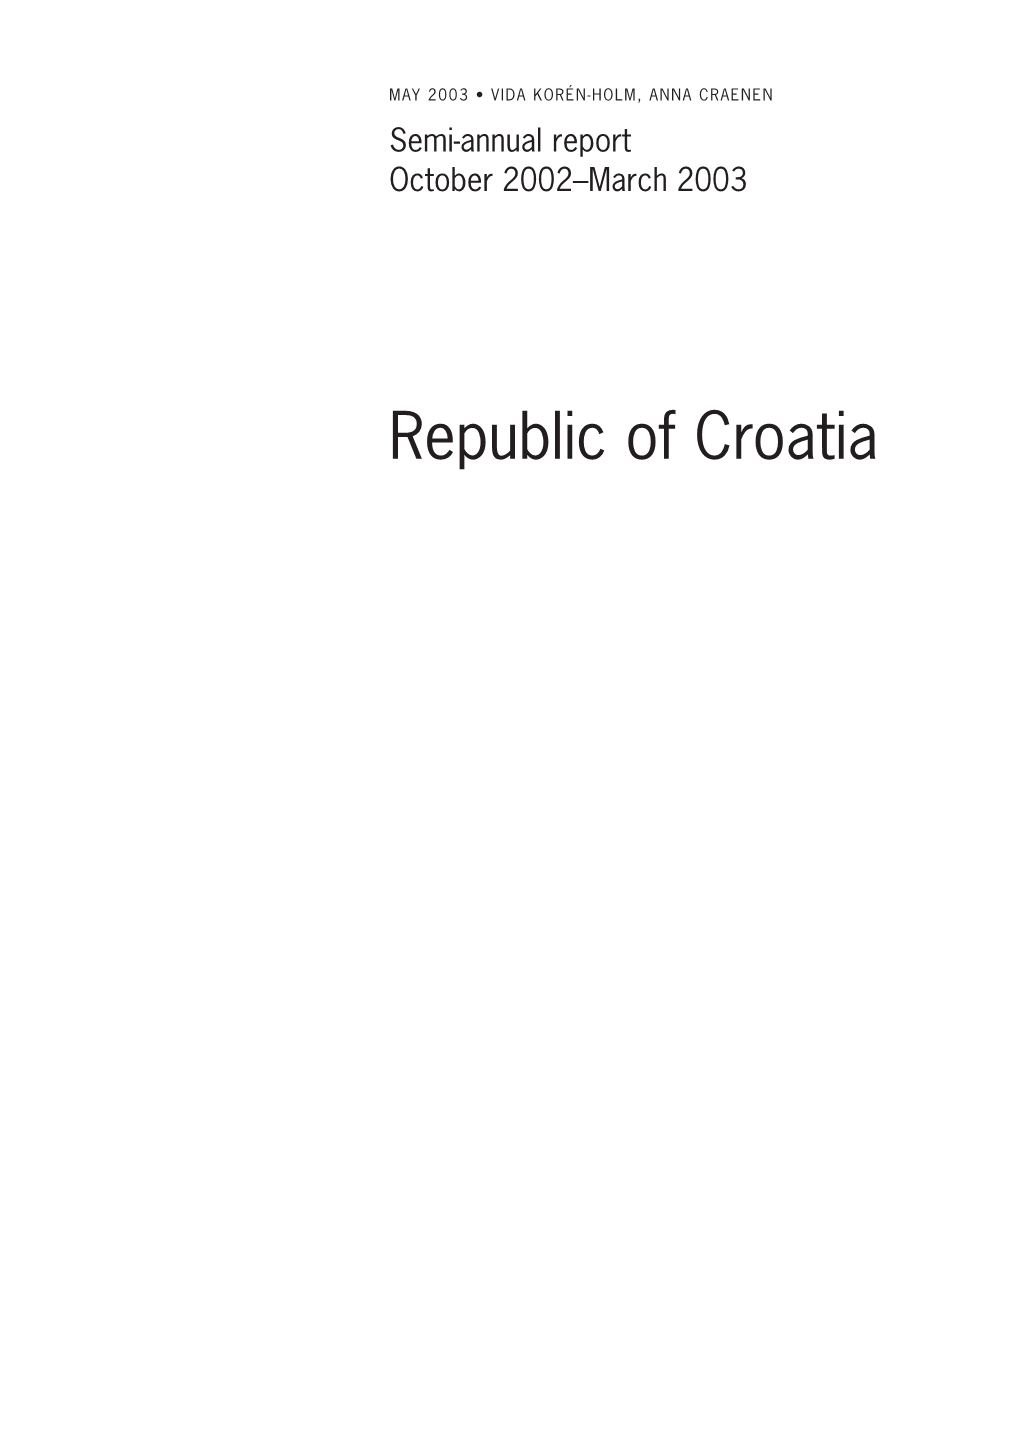 Omslag Croatia.Pmd